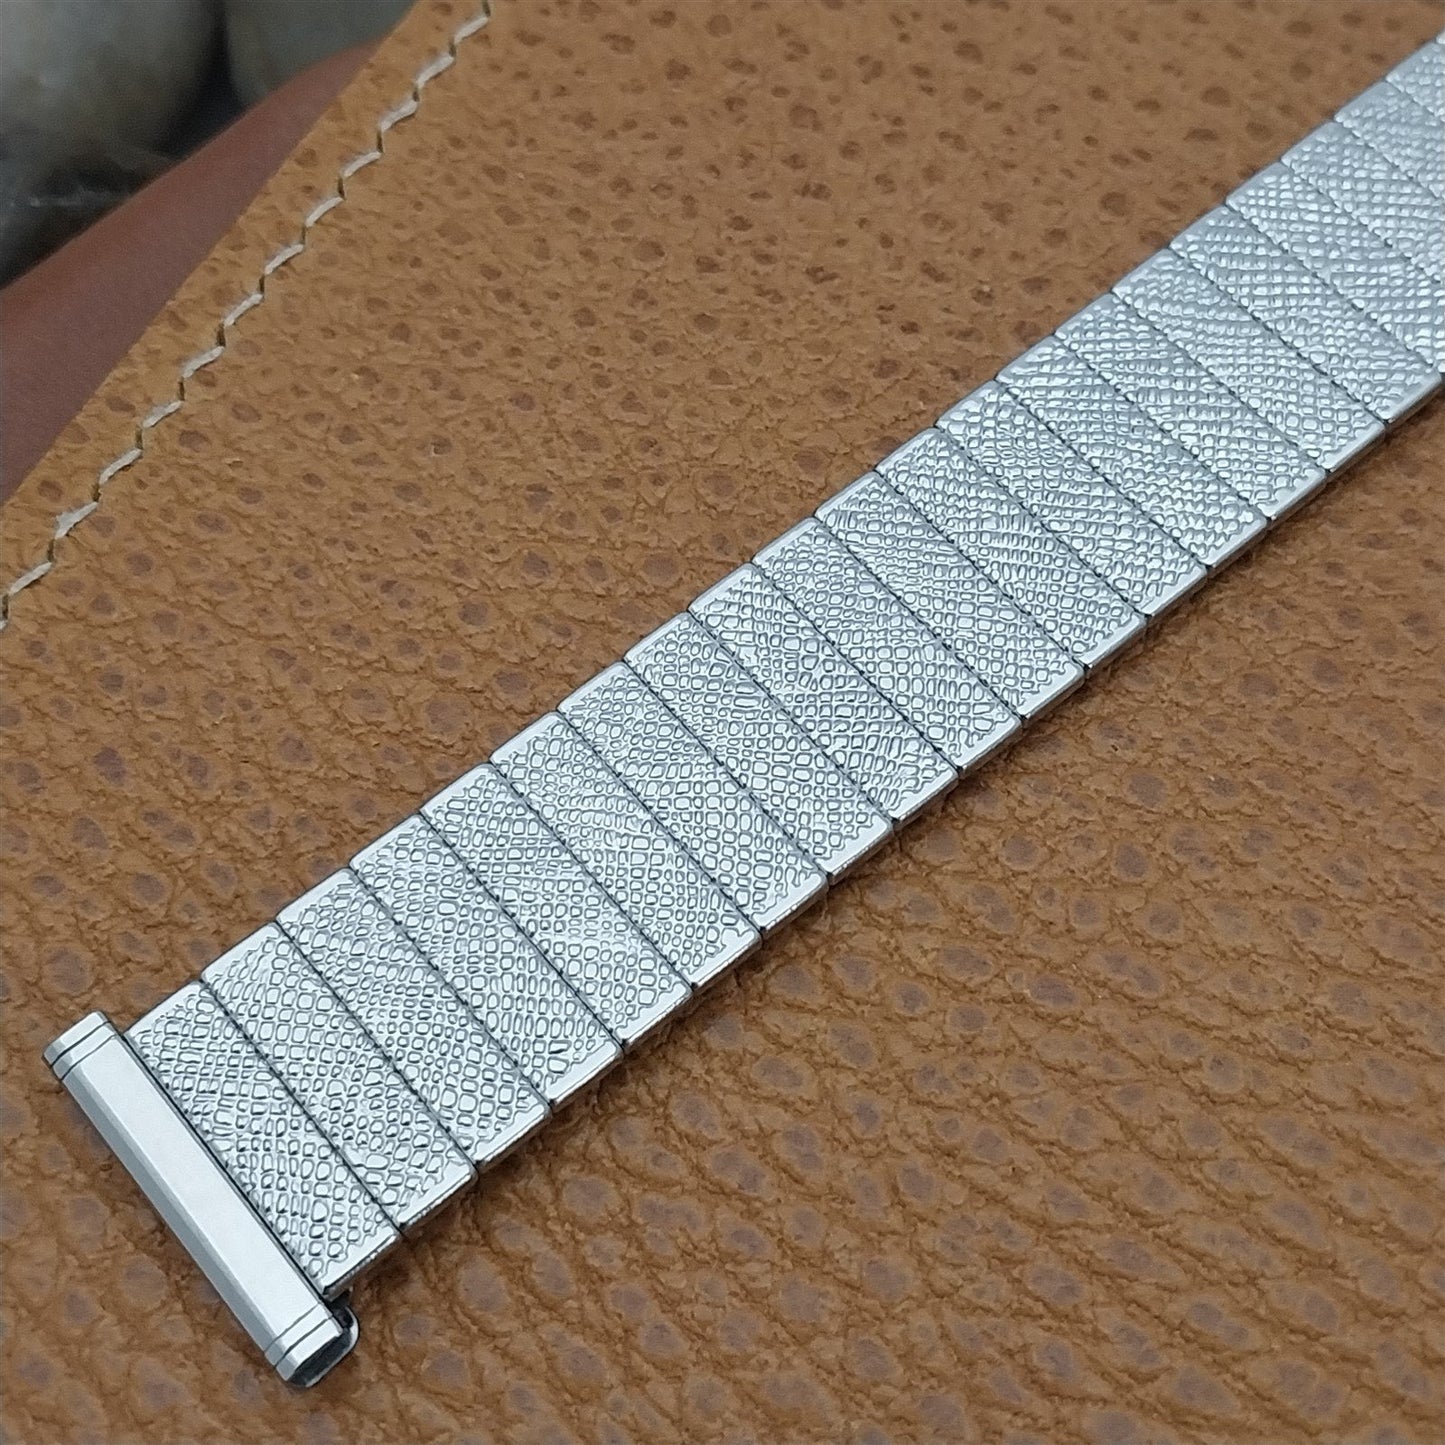 Vintage Uniflex Slim Stainless Steel Classic Expansion Unused 1960s Watch Band